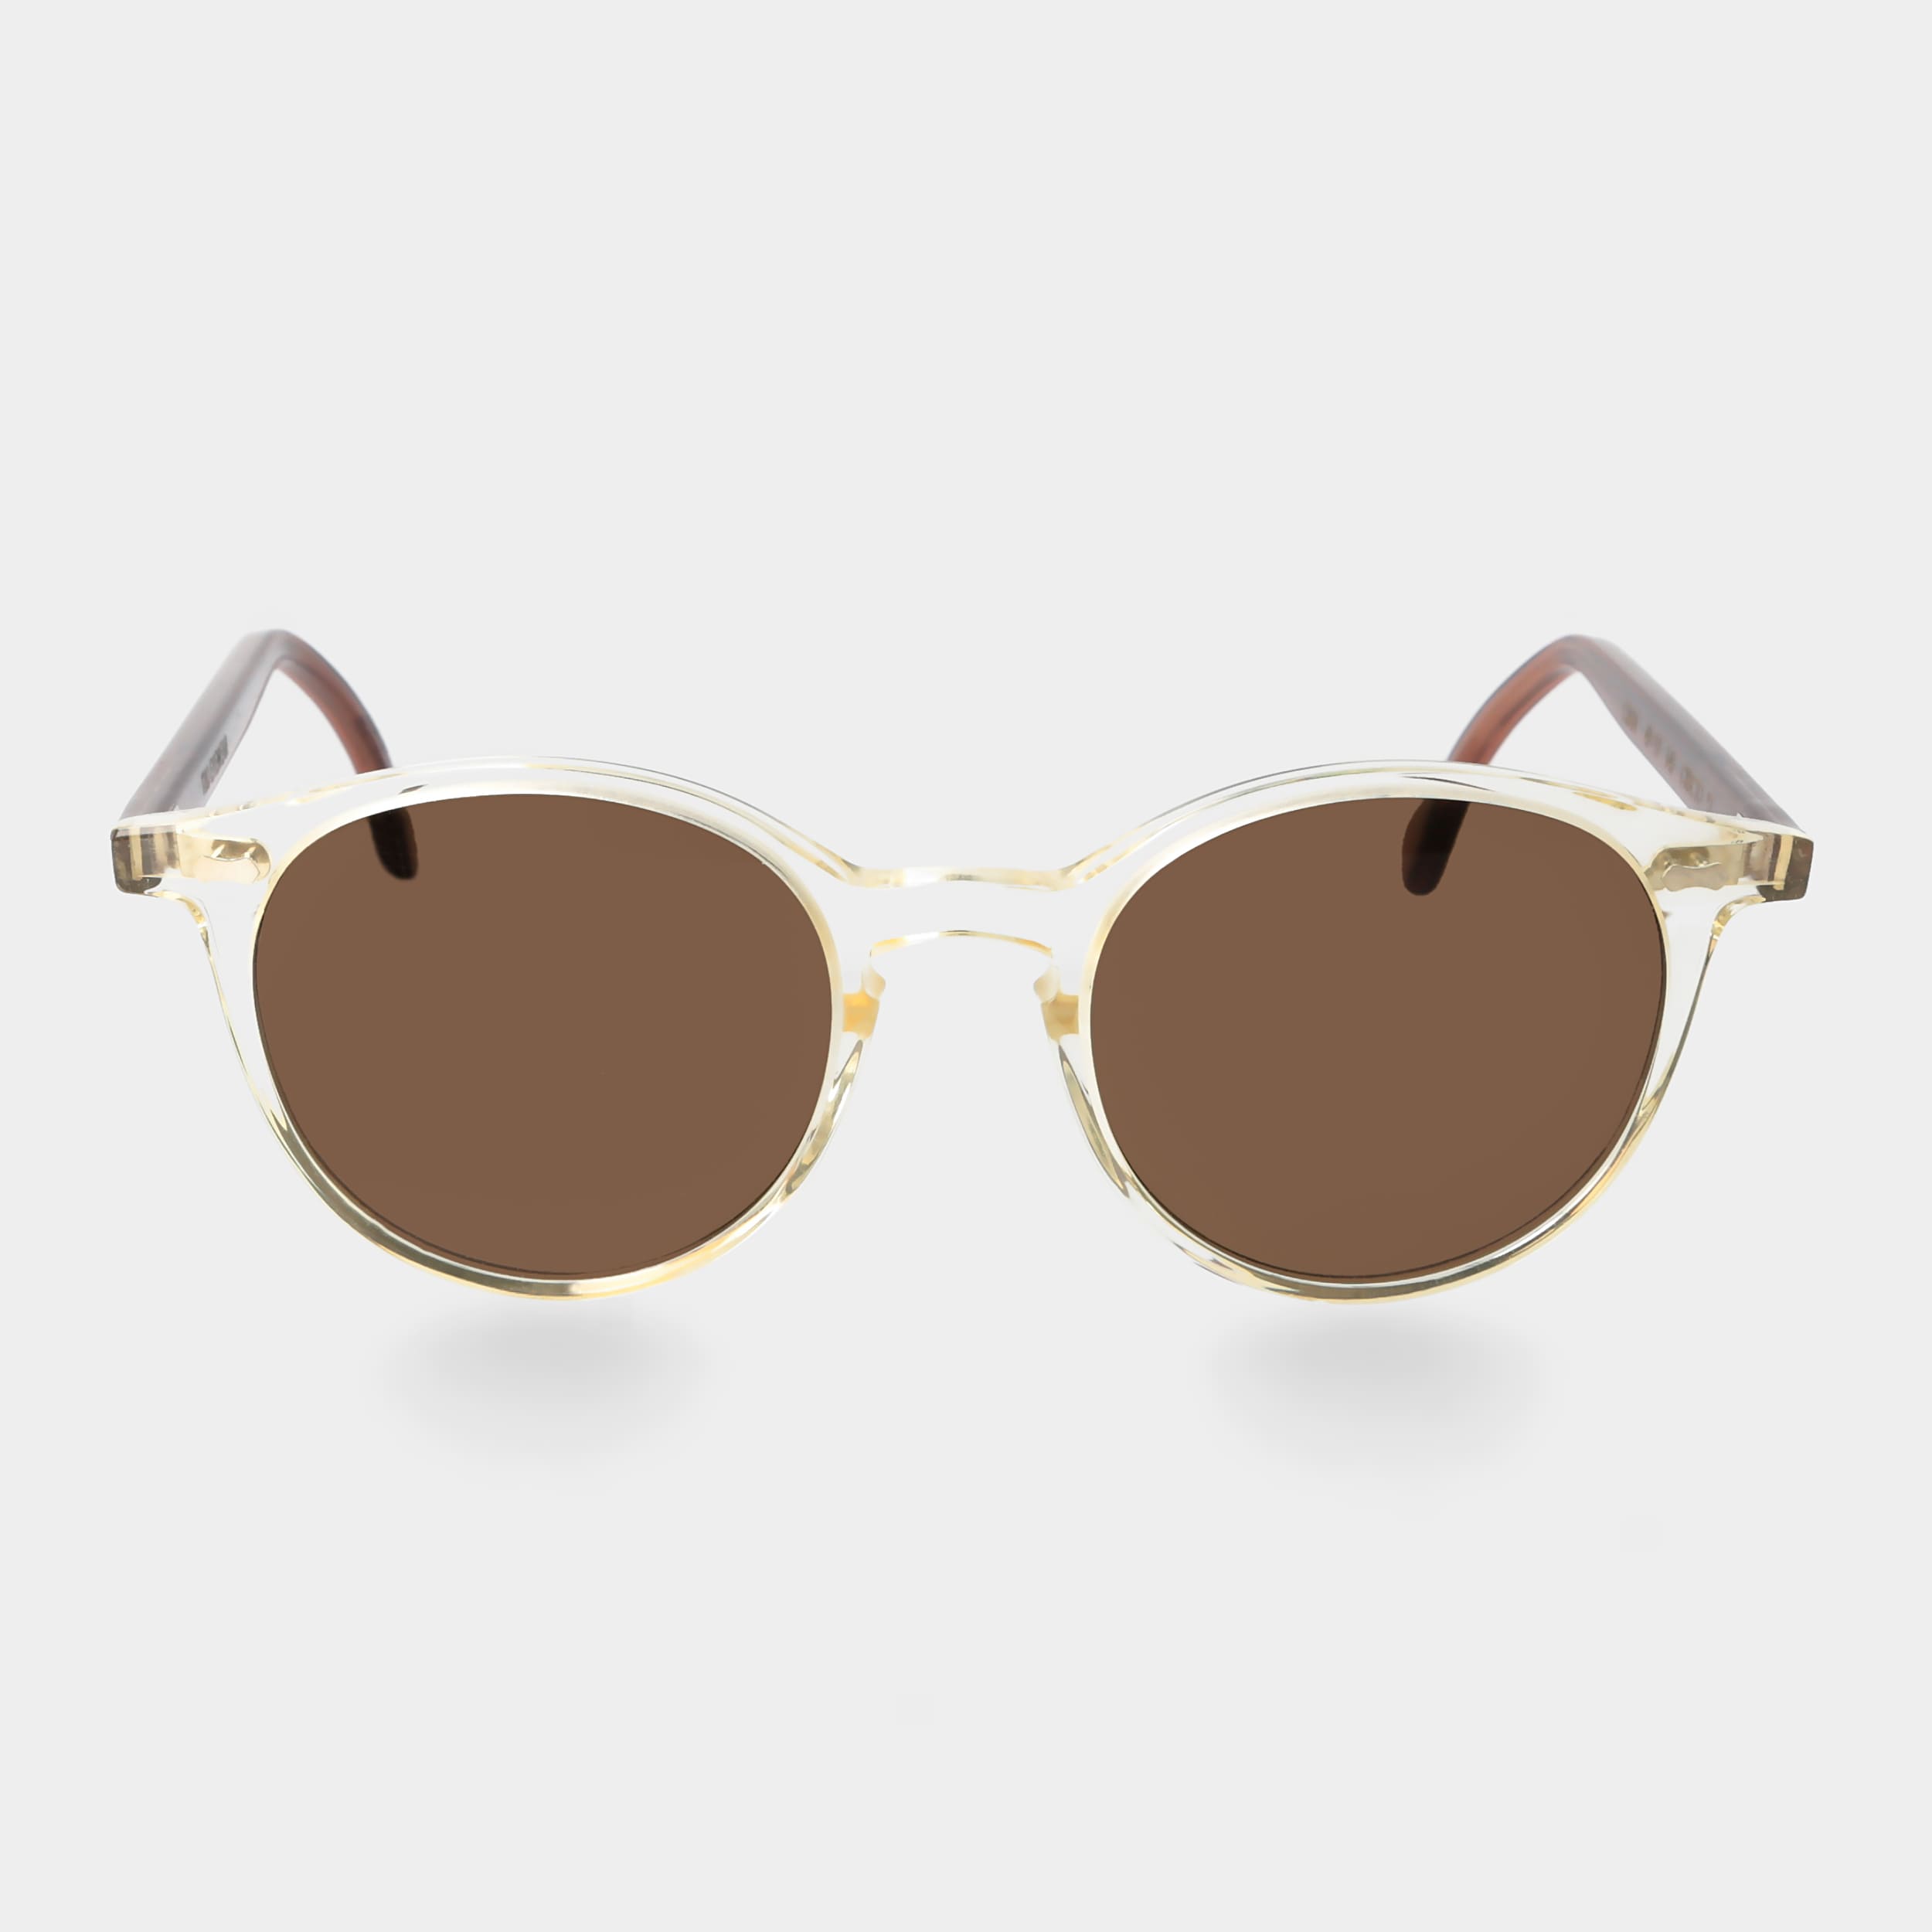 TBD Eyewear Lenses, with Sunglasses Italy handmade | Brown in